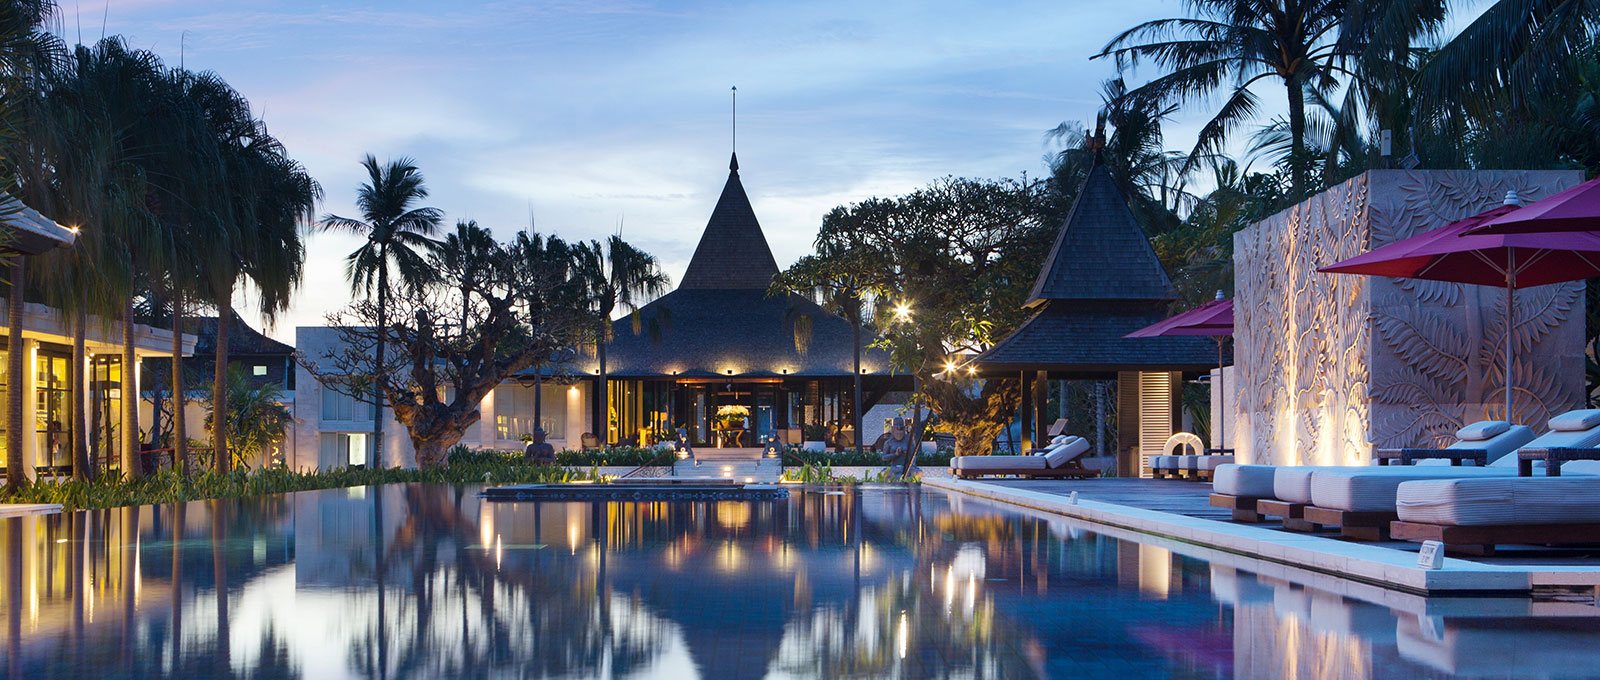 Wedding by The Royal Santrian Resort & Villa hotel, Bali